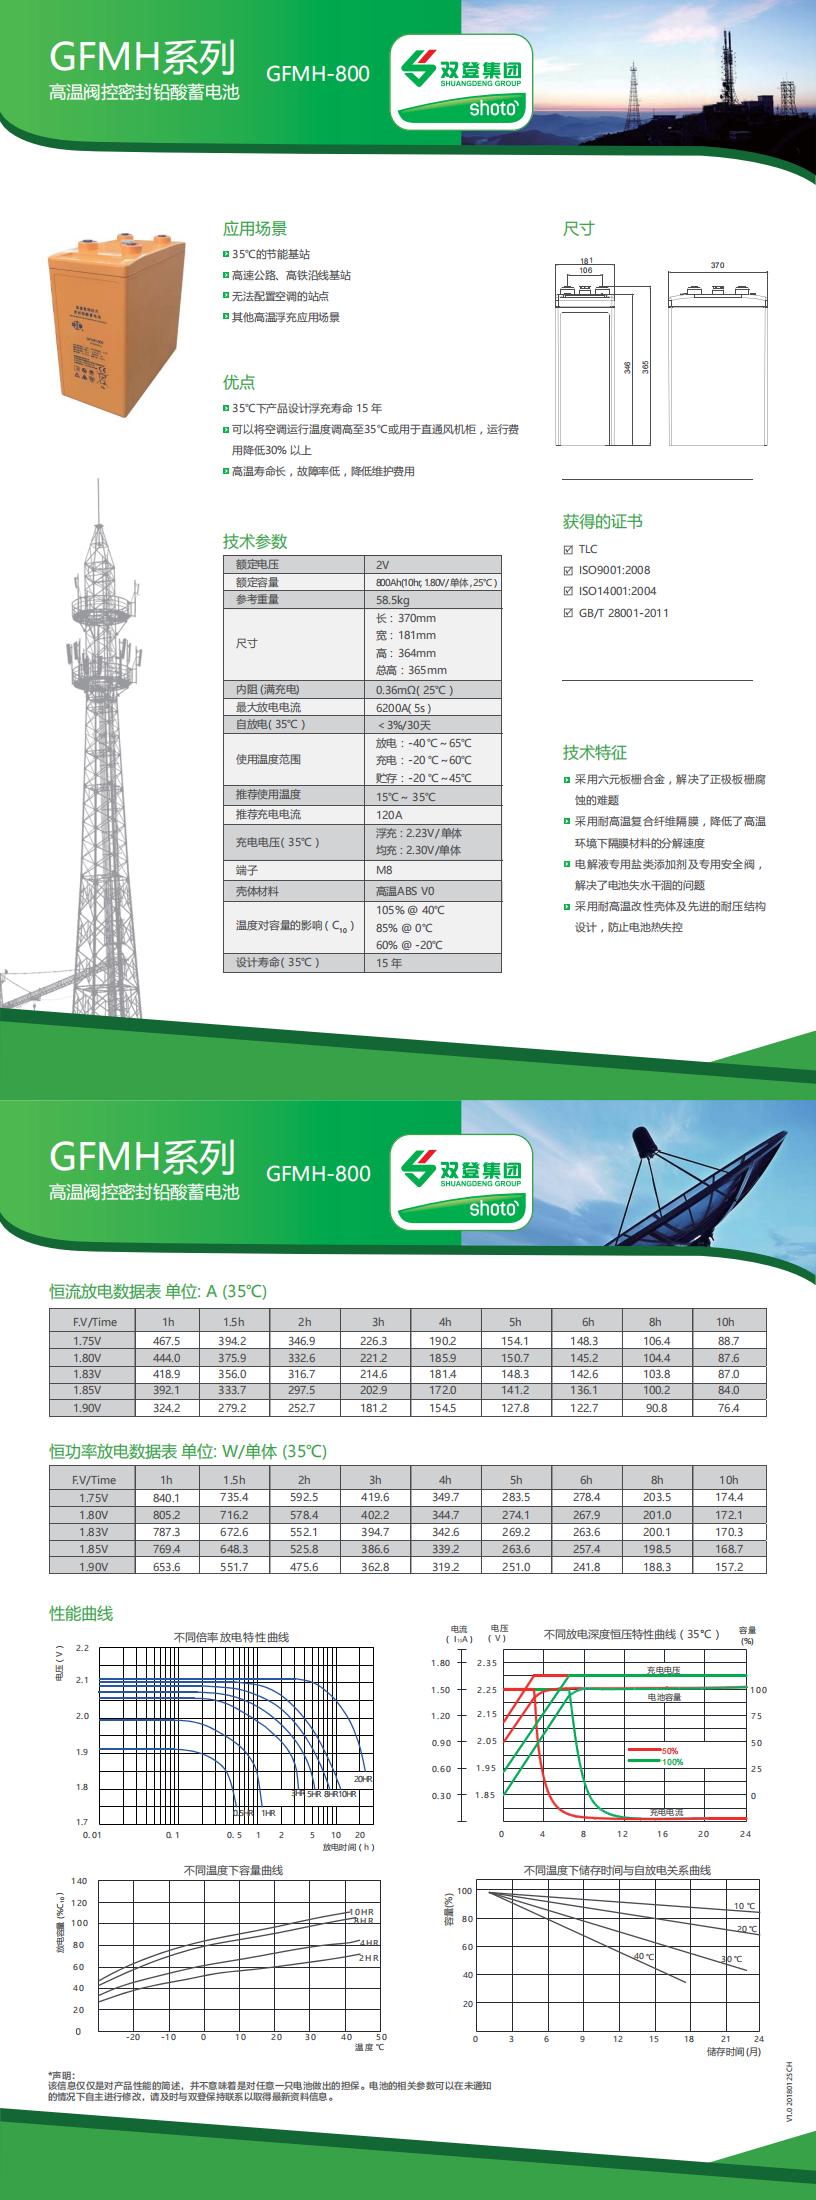 GFMH-800中文_00.jpg